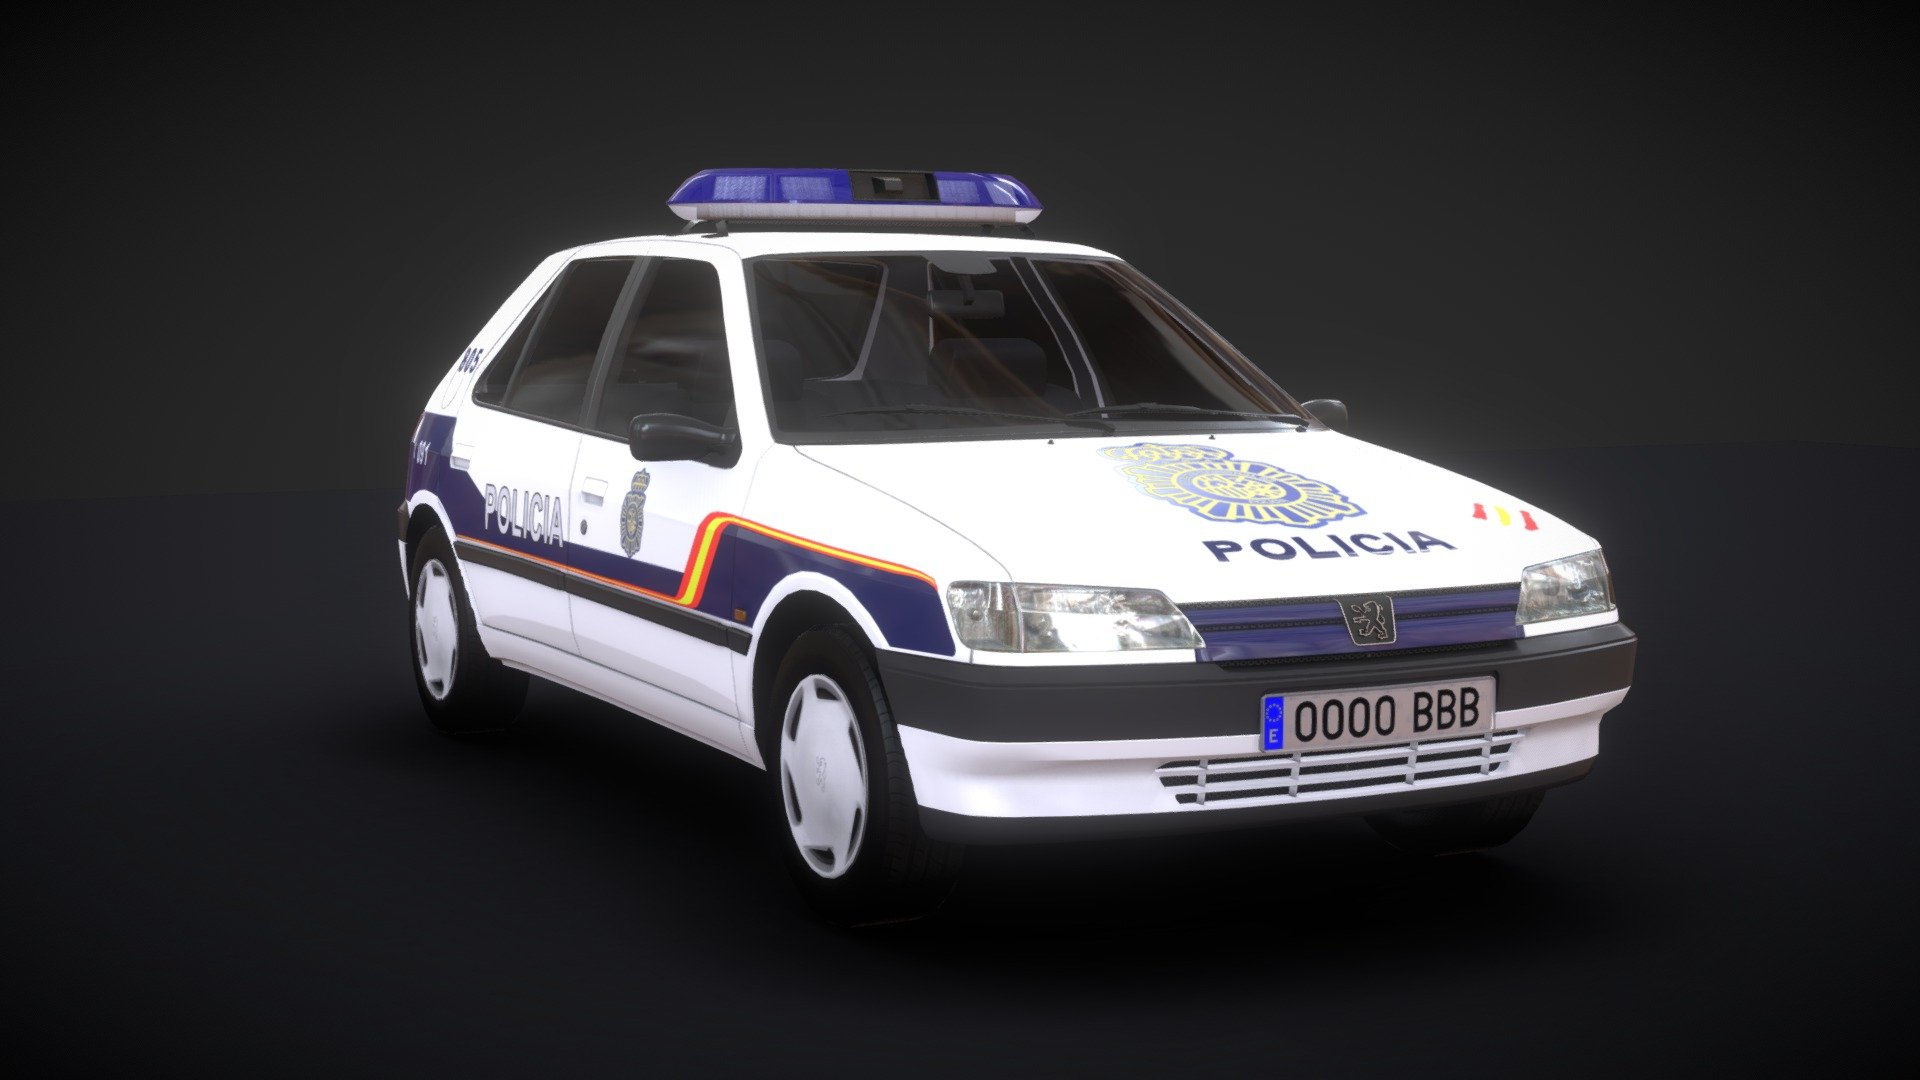 Peugeot 306 Policia Nacional - Buy Royalty Free 3D model by codexito 3d model